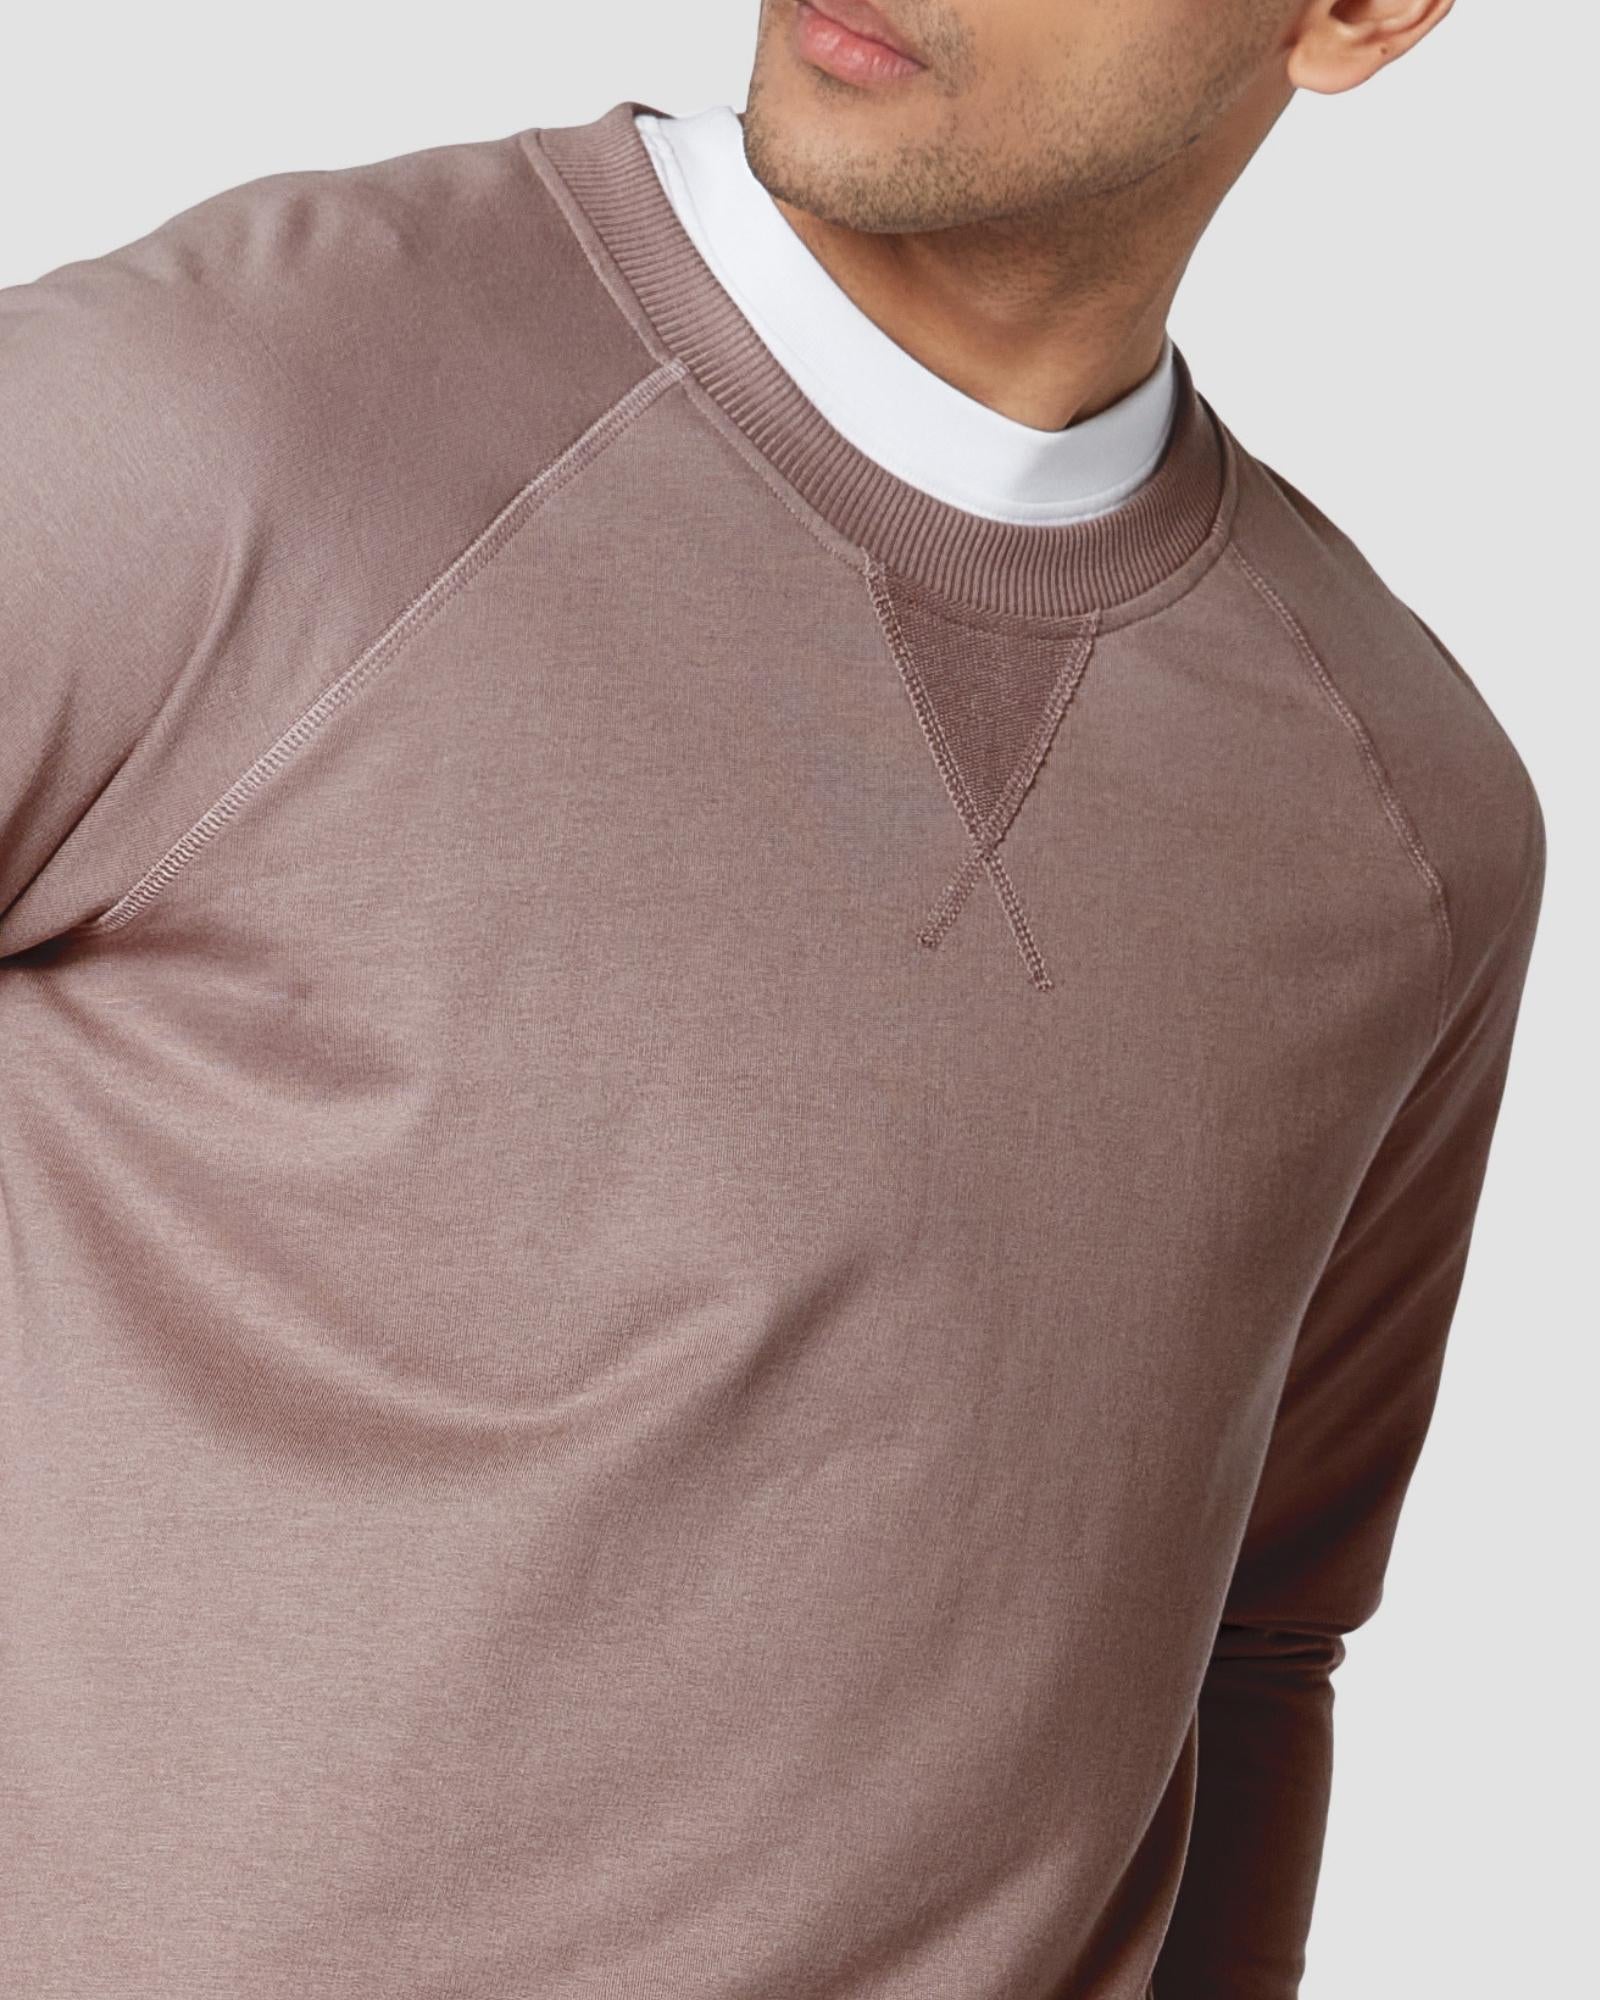 cityof_ - Luxe Classic Raglan Sweatshirt